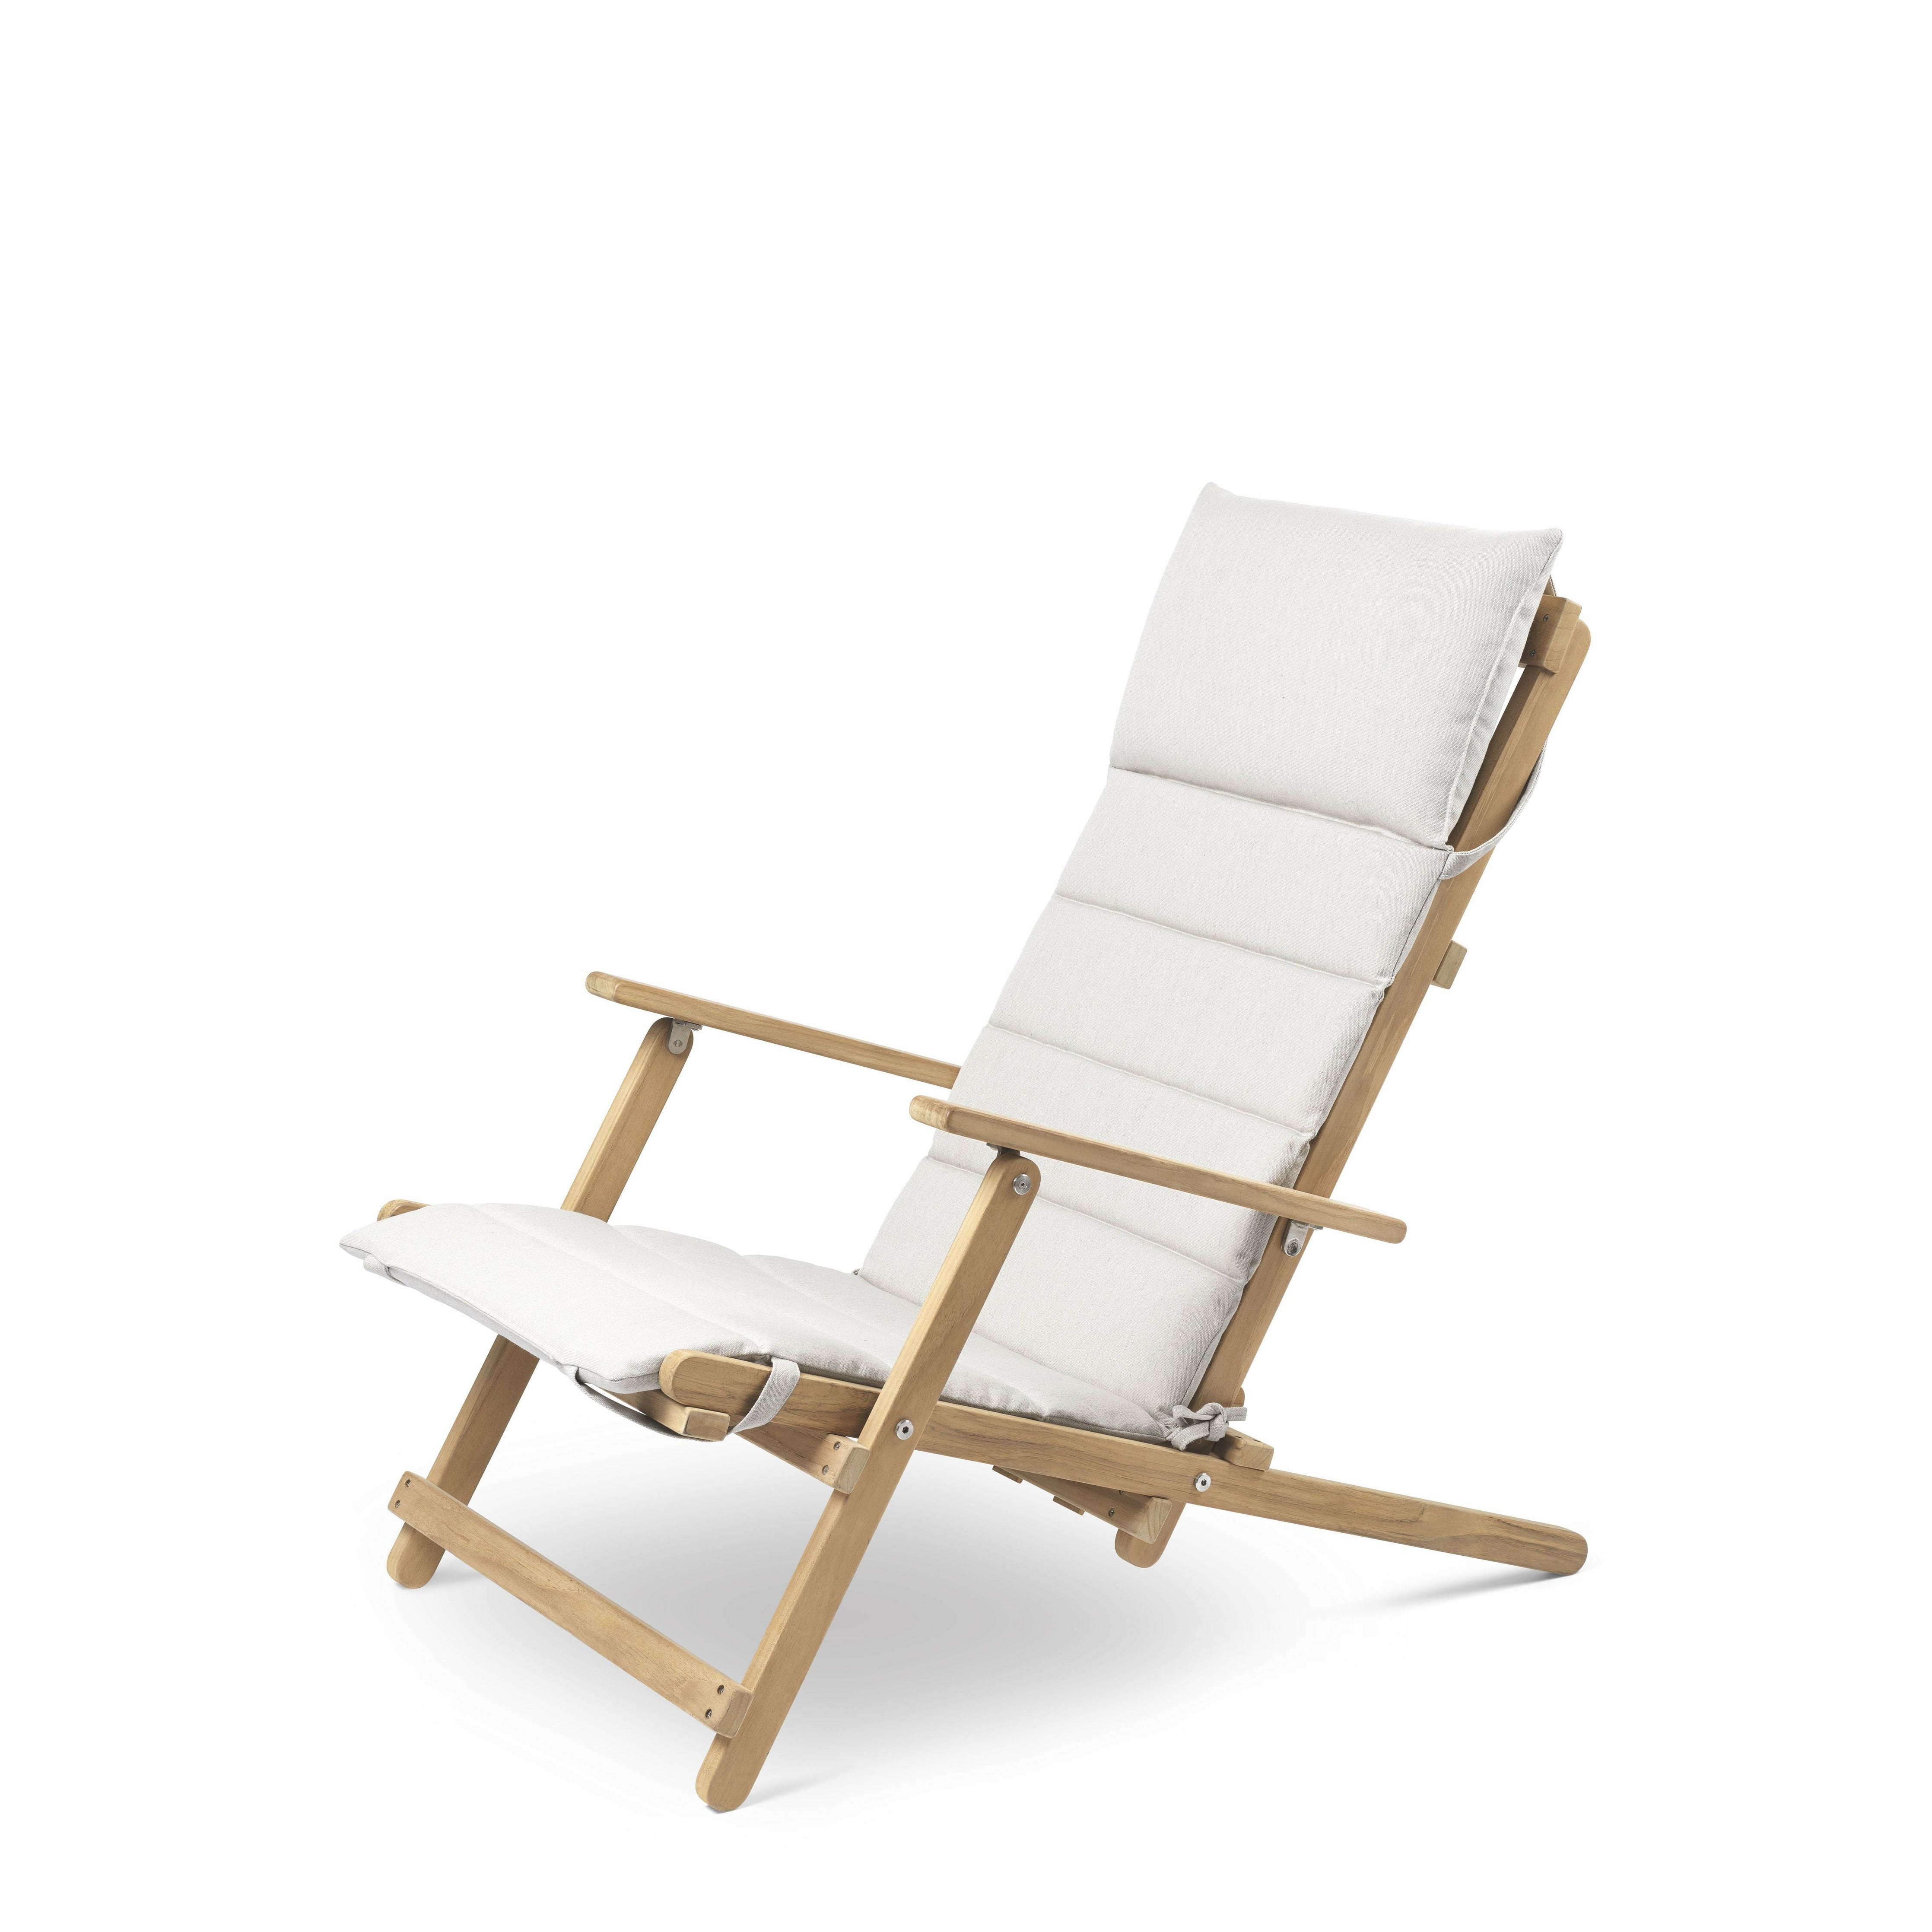 Carl Hansen Cushion pour BM5568 Deck Chair, patrimoine Papyrus